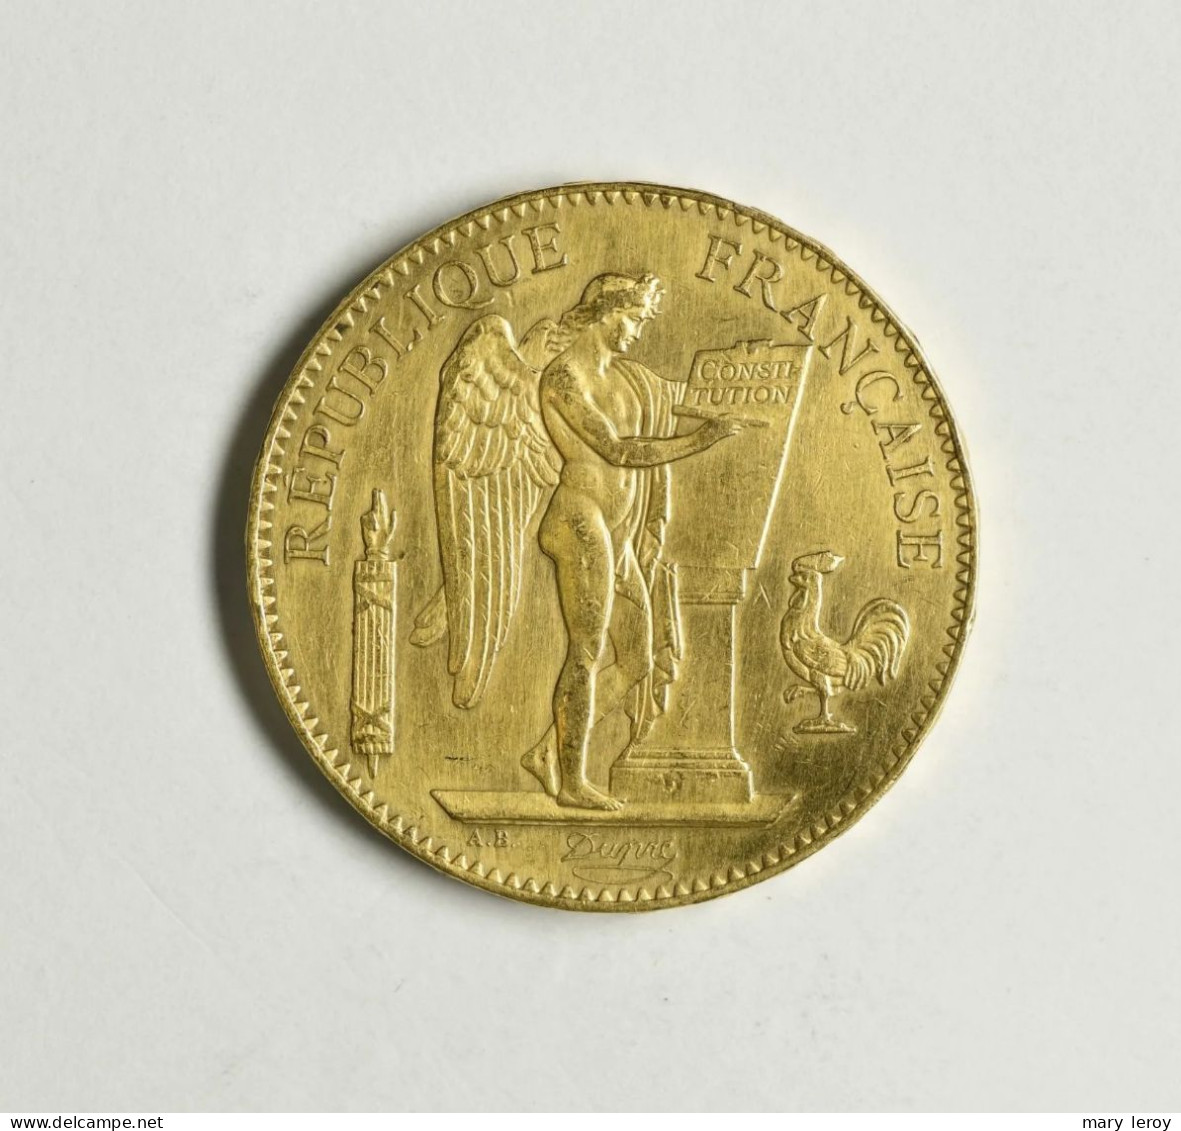 Superbe & Rare Pièce De 100 Francs Or Génie Paris 1878 G. 1137 - 100 Francs (goud)